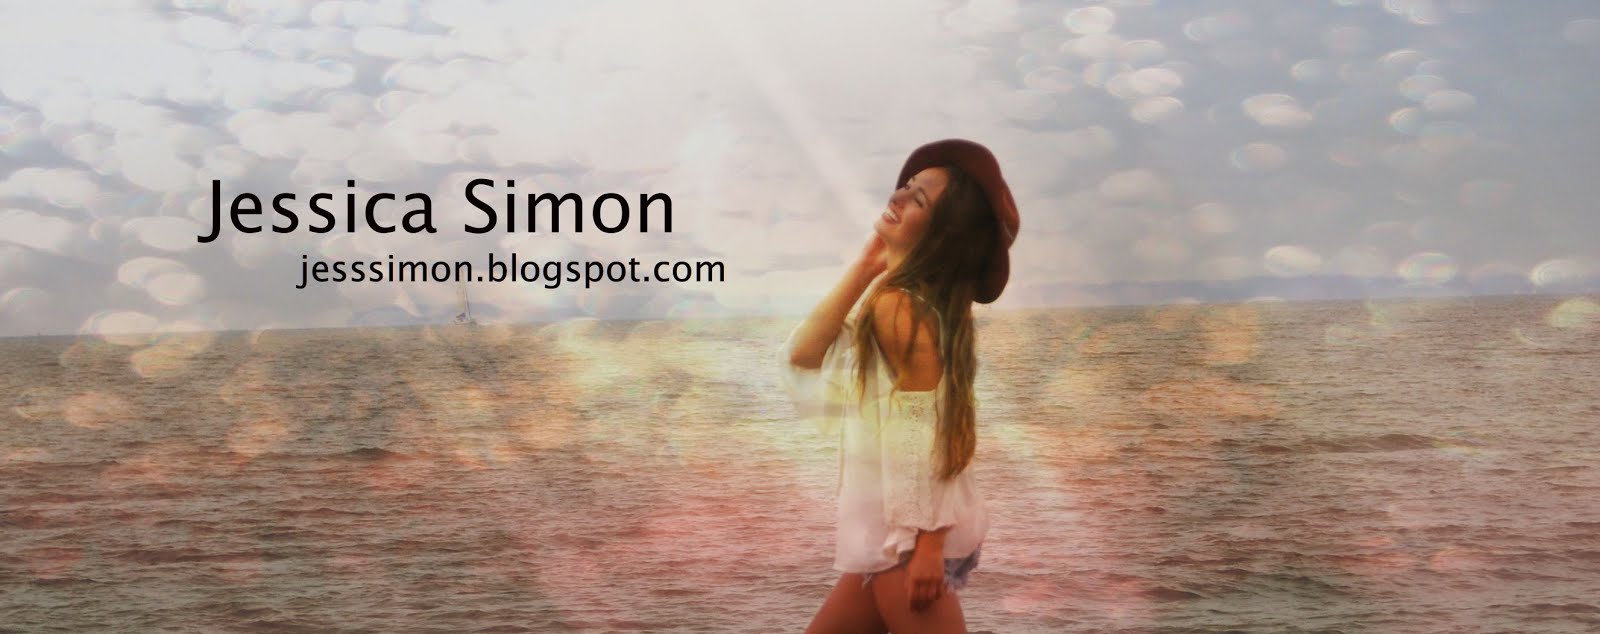 Jessica Simon